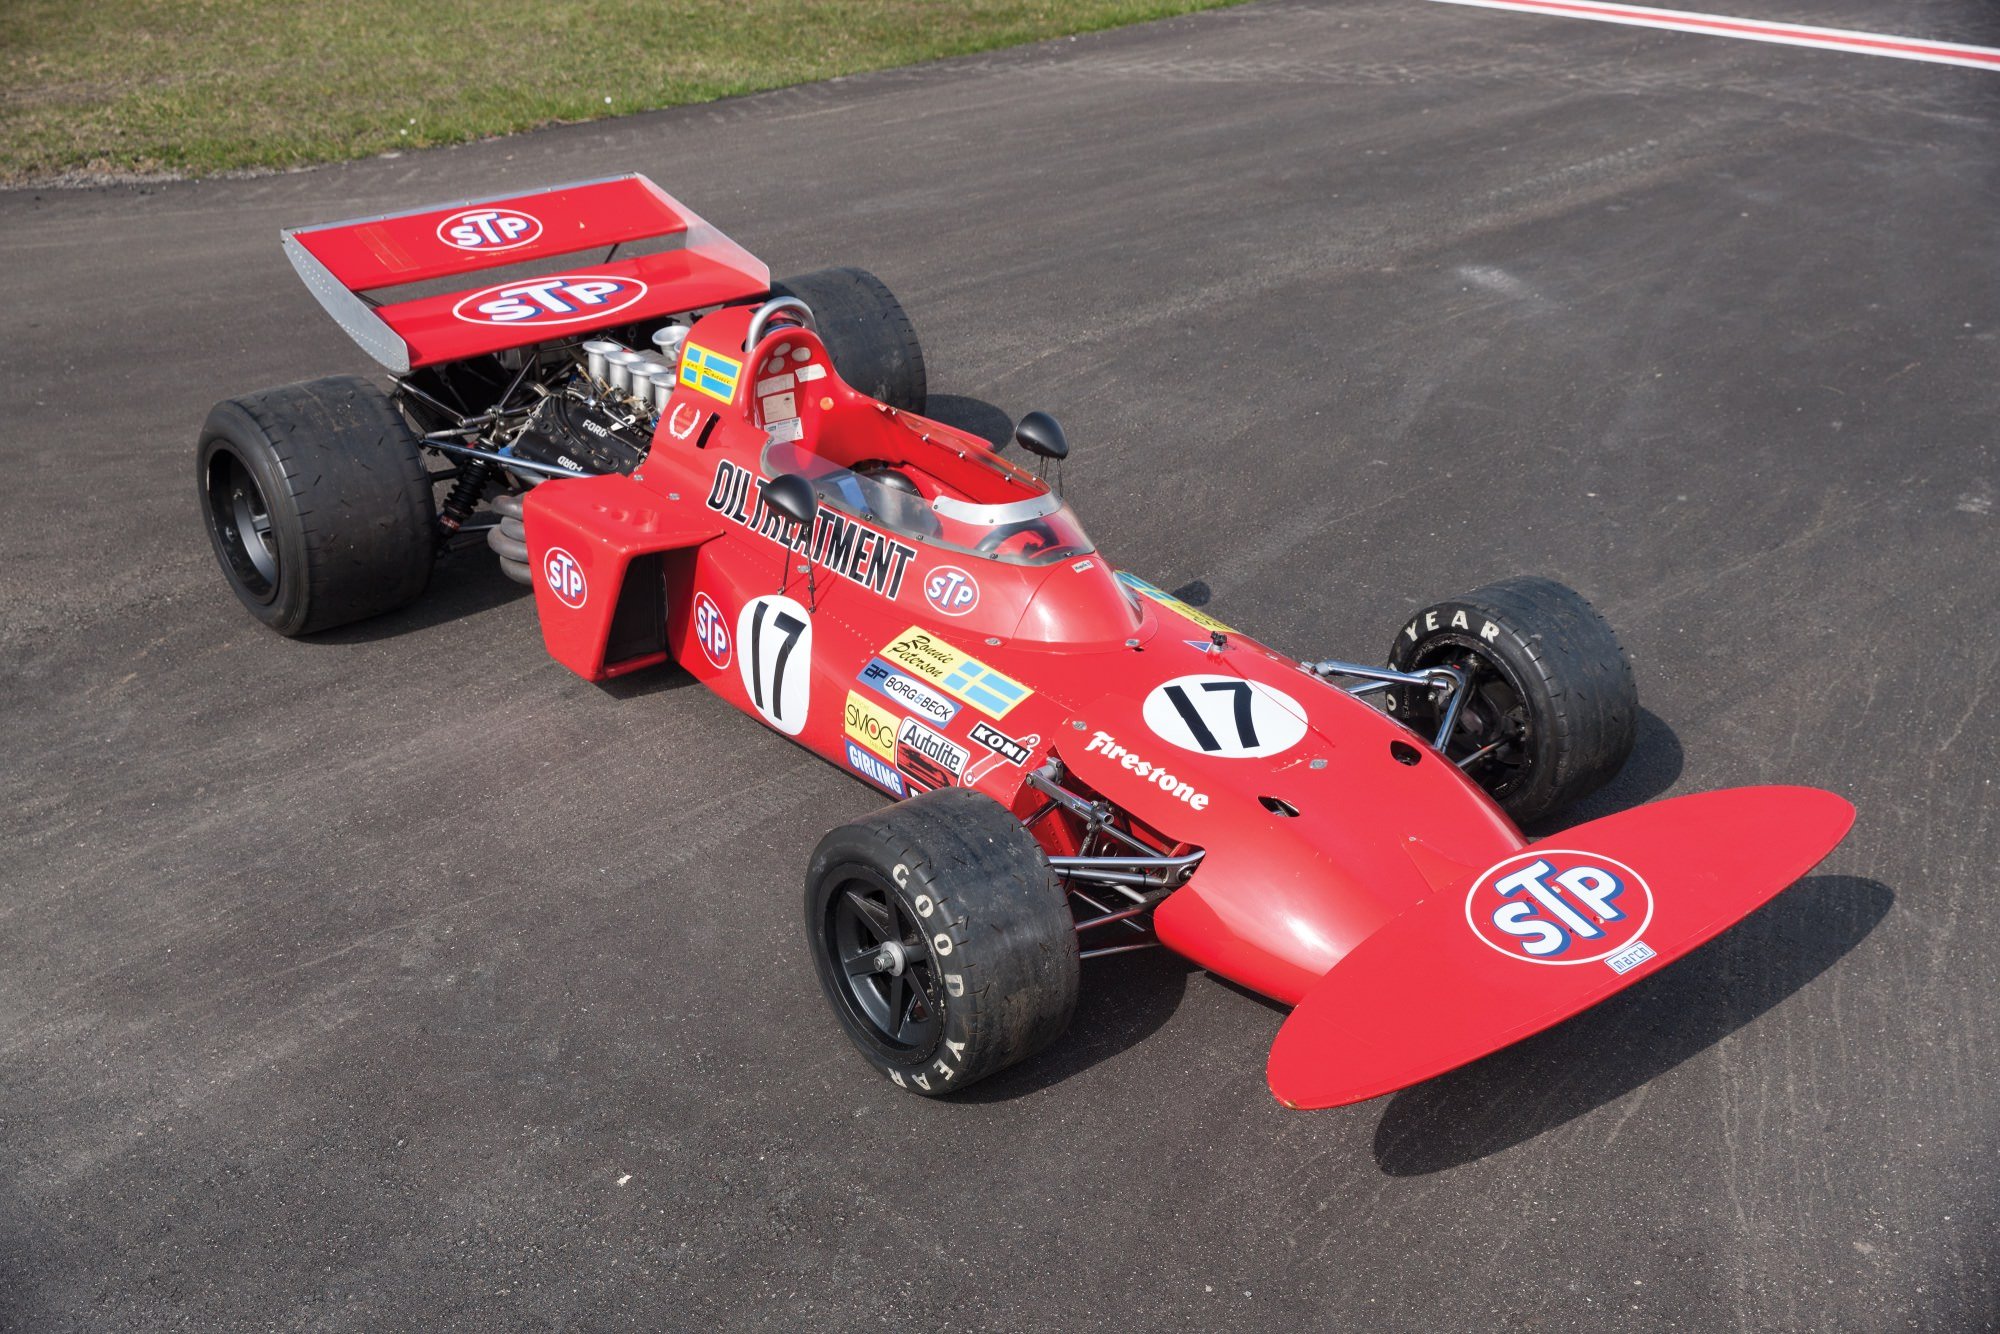 Niki Lauda's March 711 Formula 1 Car Silodrome